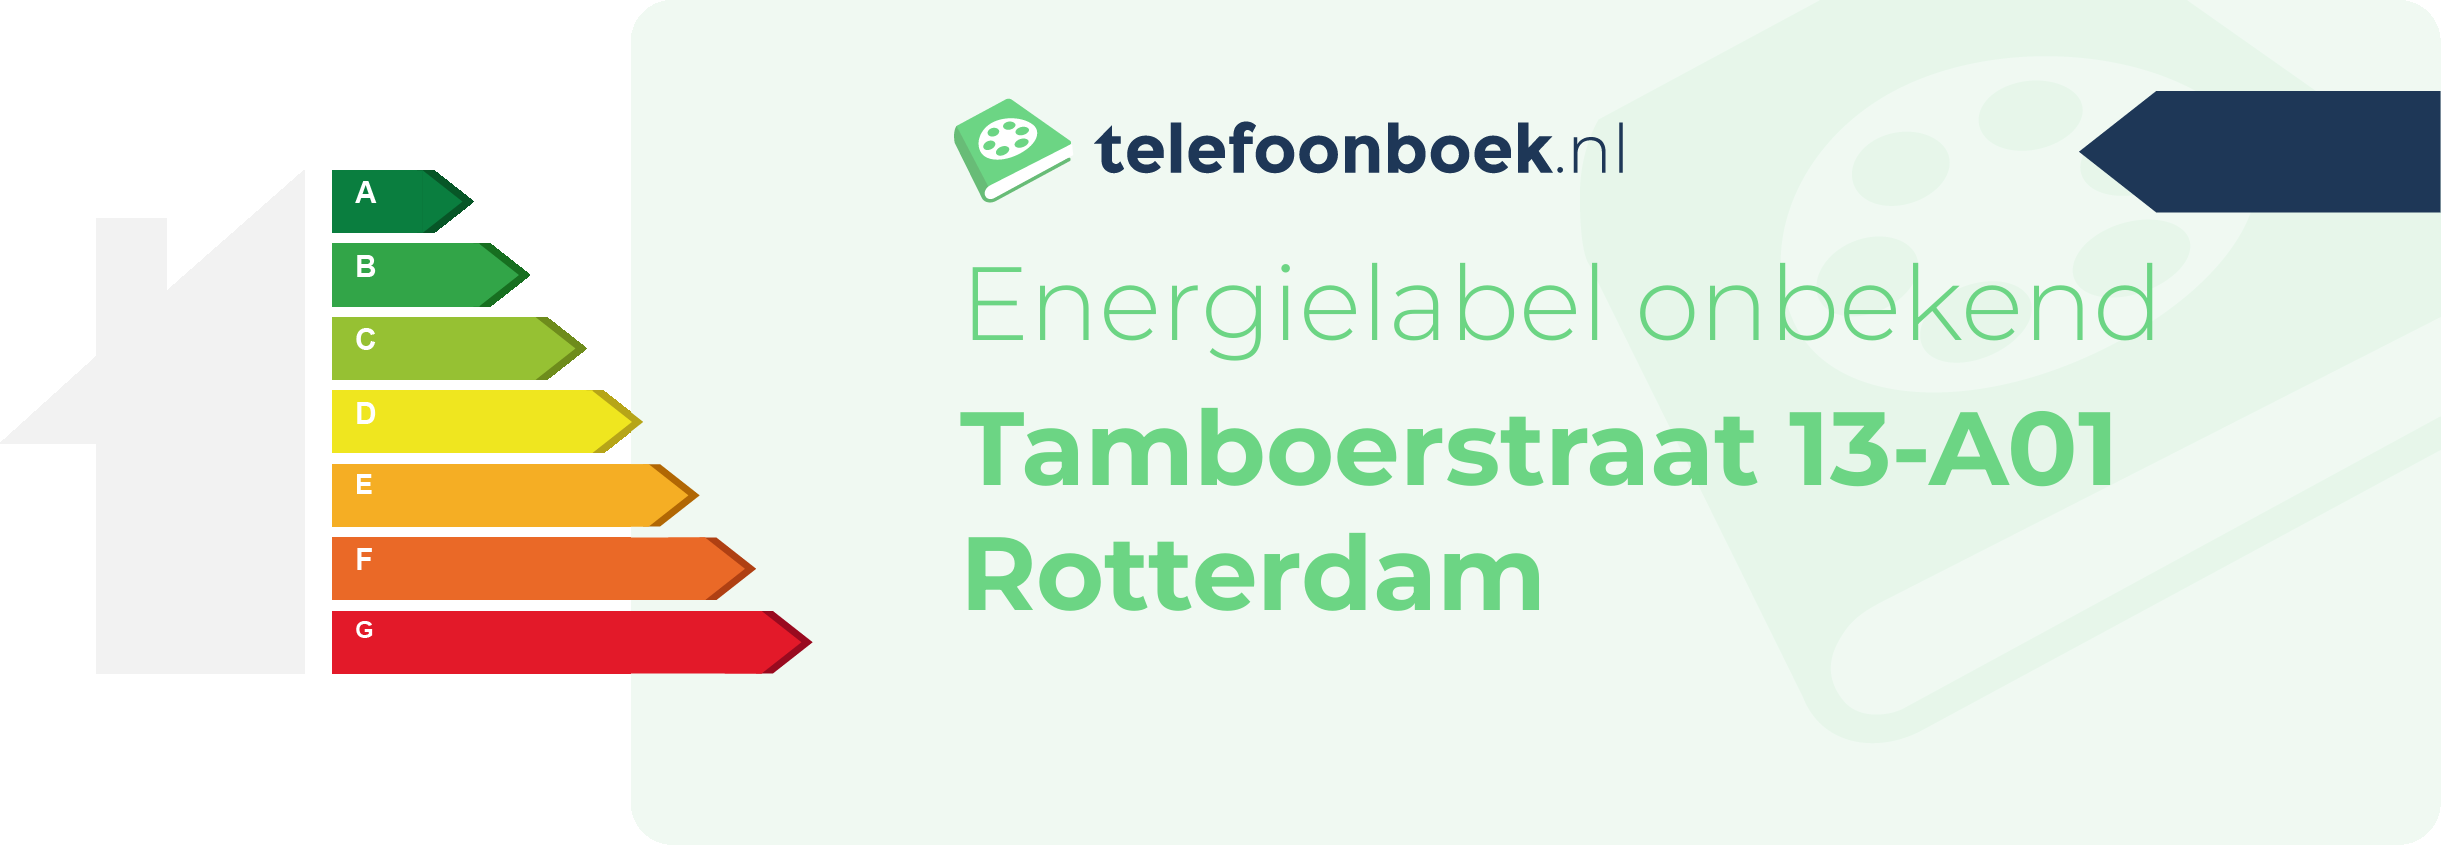 Energielabel Tamboerstraat 13-A01 Rotterdam